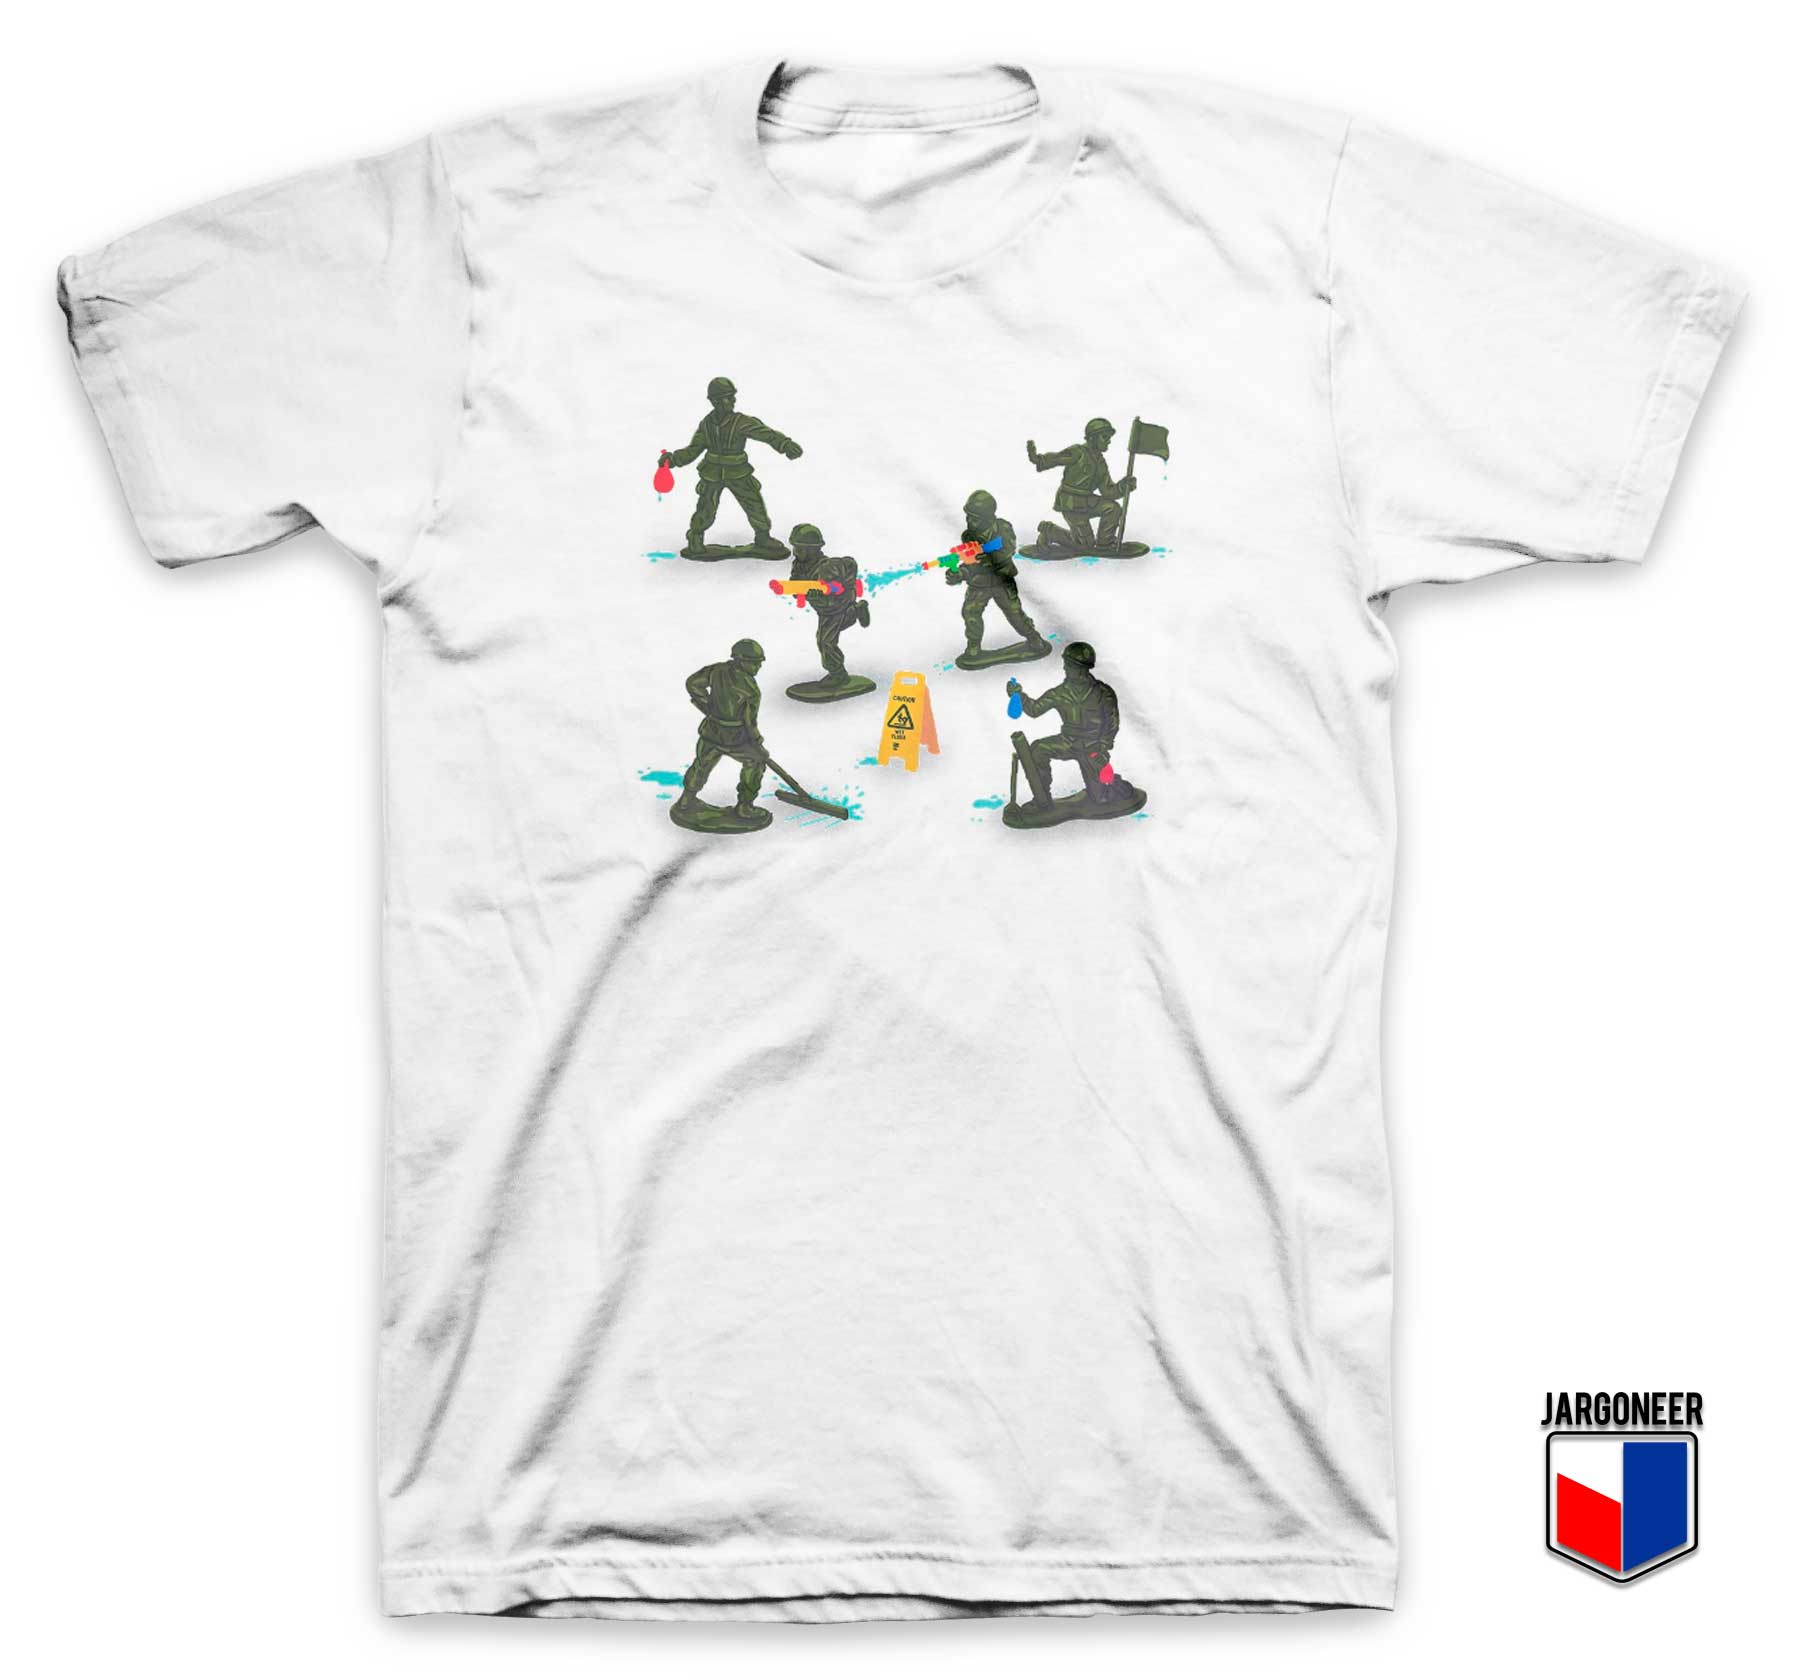 Make Fun Not War Soldier Toy T Shirt - Shop Unique Graphic Cool Shirt Designs